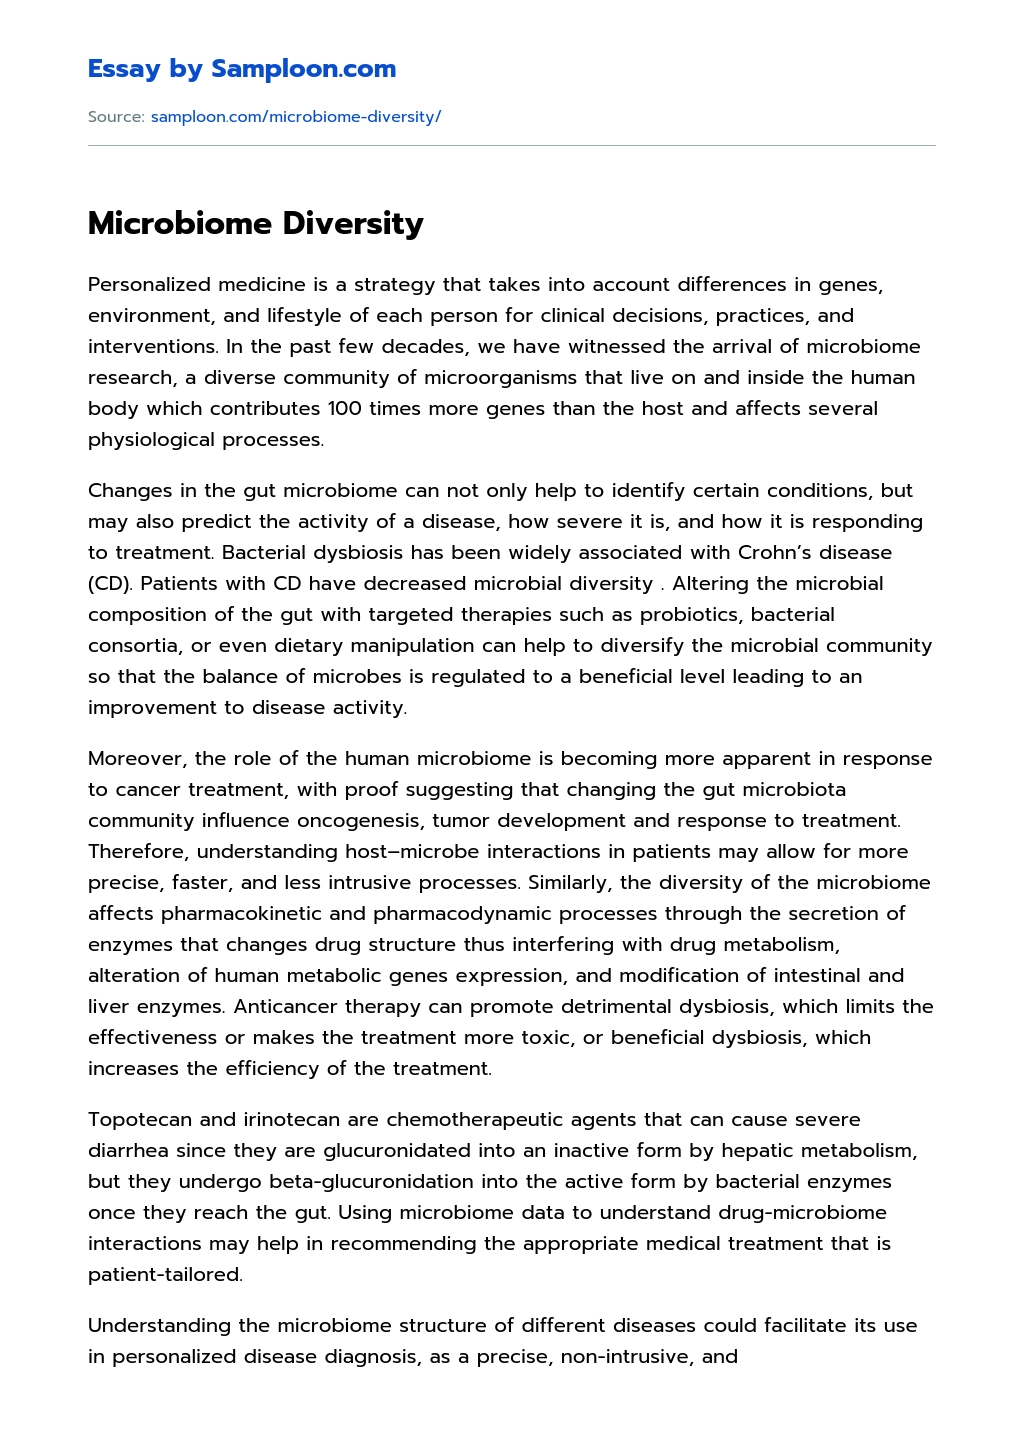 Microbiome Diversity essay